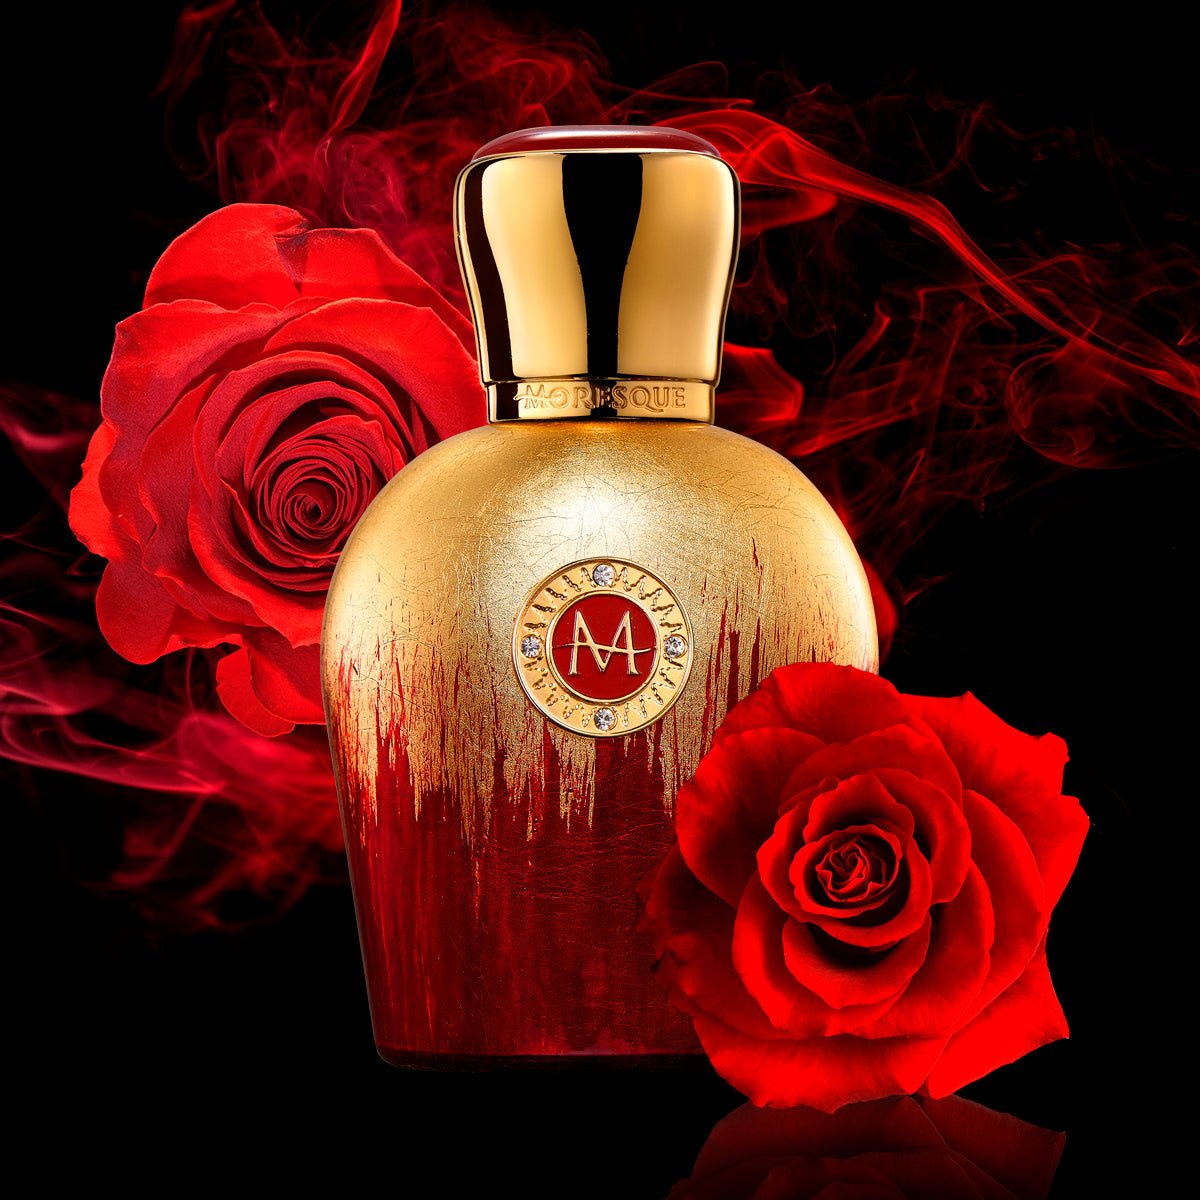 Moresque Parfums Contessa Perfume & Cologne 1.7 oz/50 ml ScentRabbit